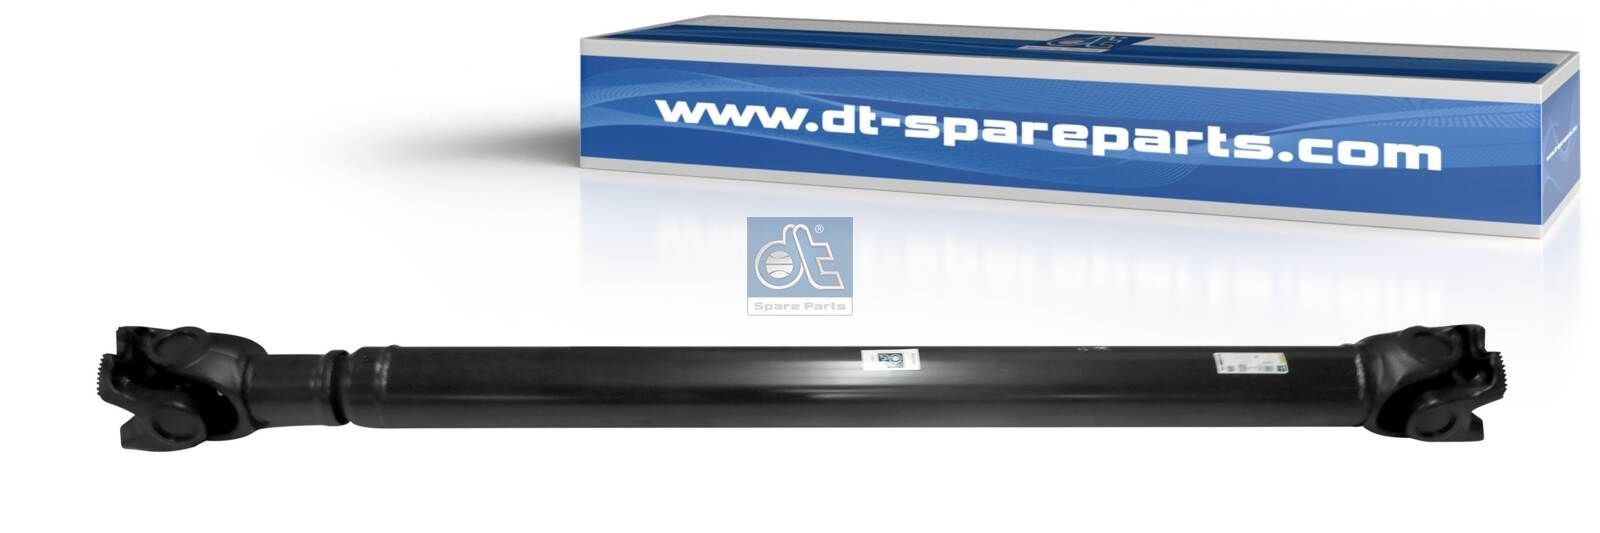 DT Spare Parts Propshaft 2.34210 buy